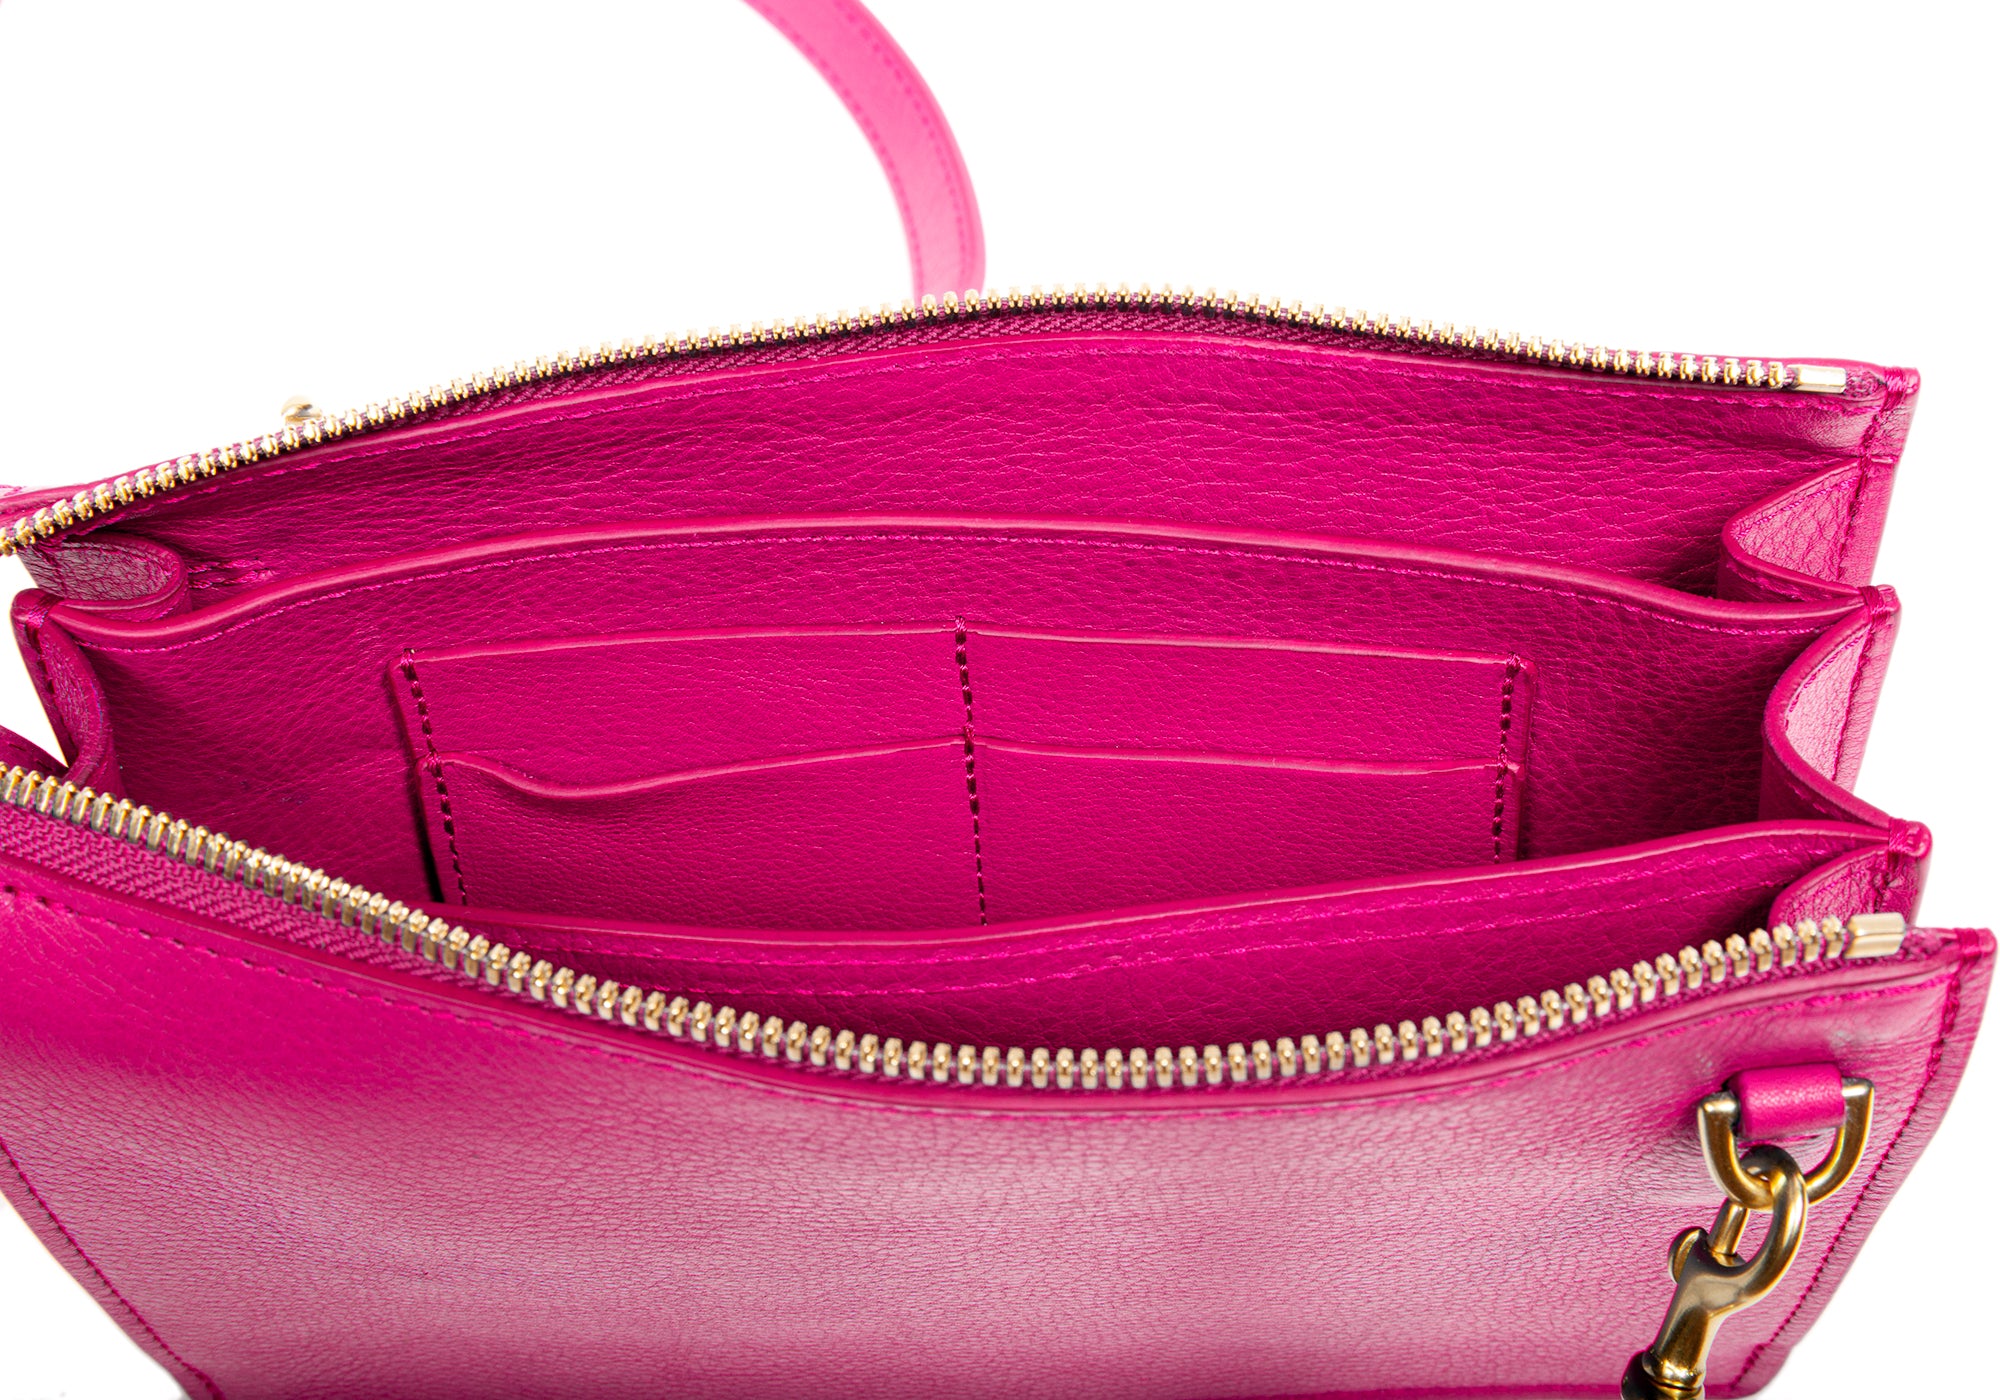 The Tripp - Handmade Women's Leather Handbag and Purse · Lotuff Leather